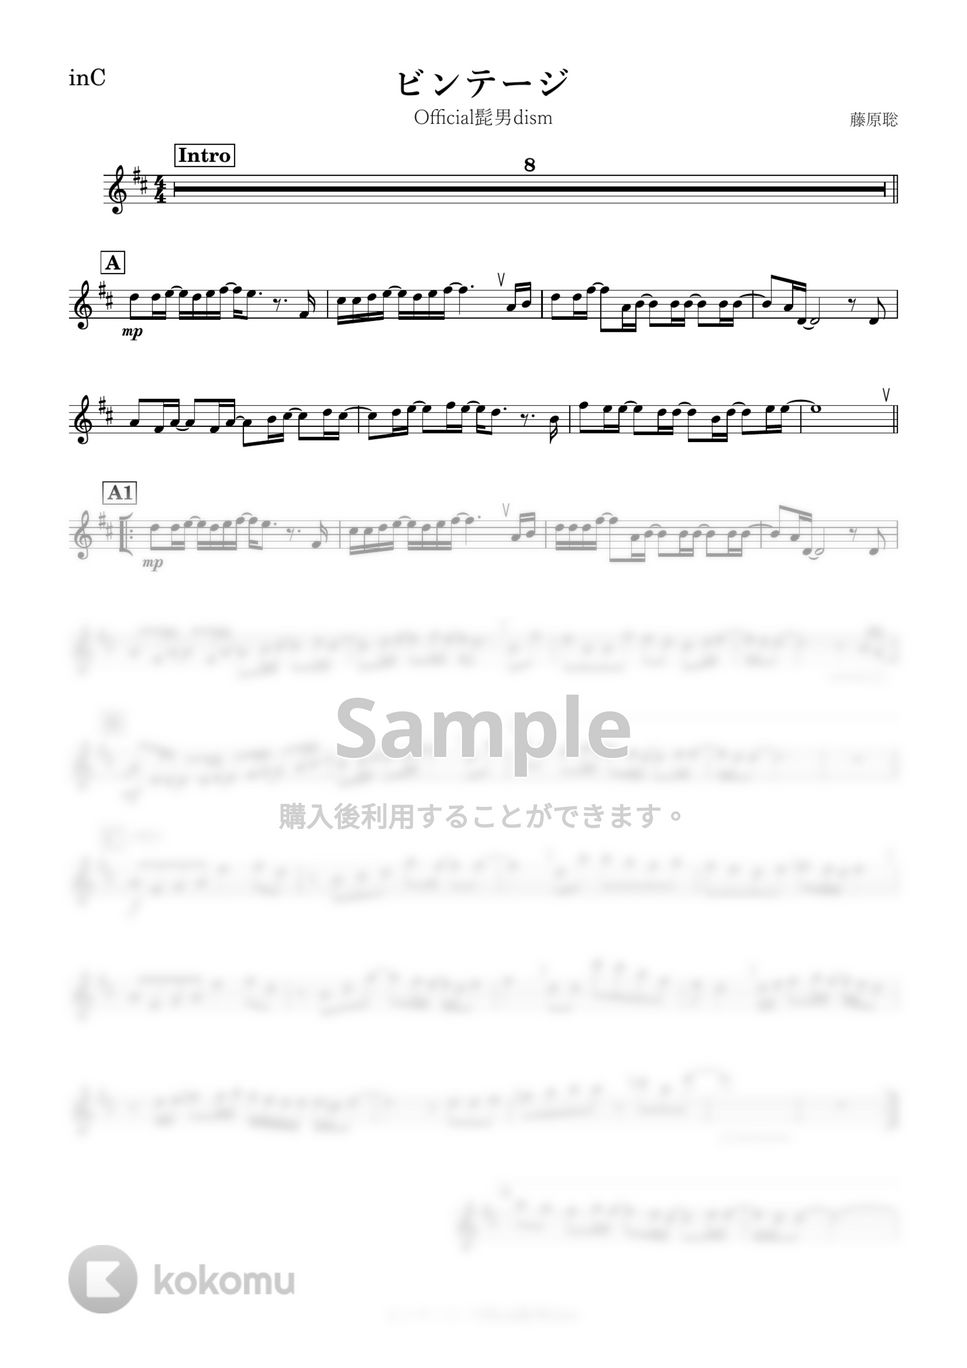 Official髭男dism - ビンテージ (C) by kanamusic